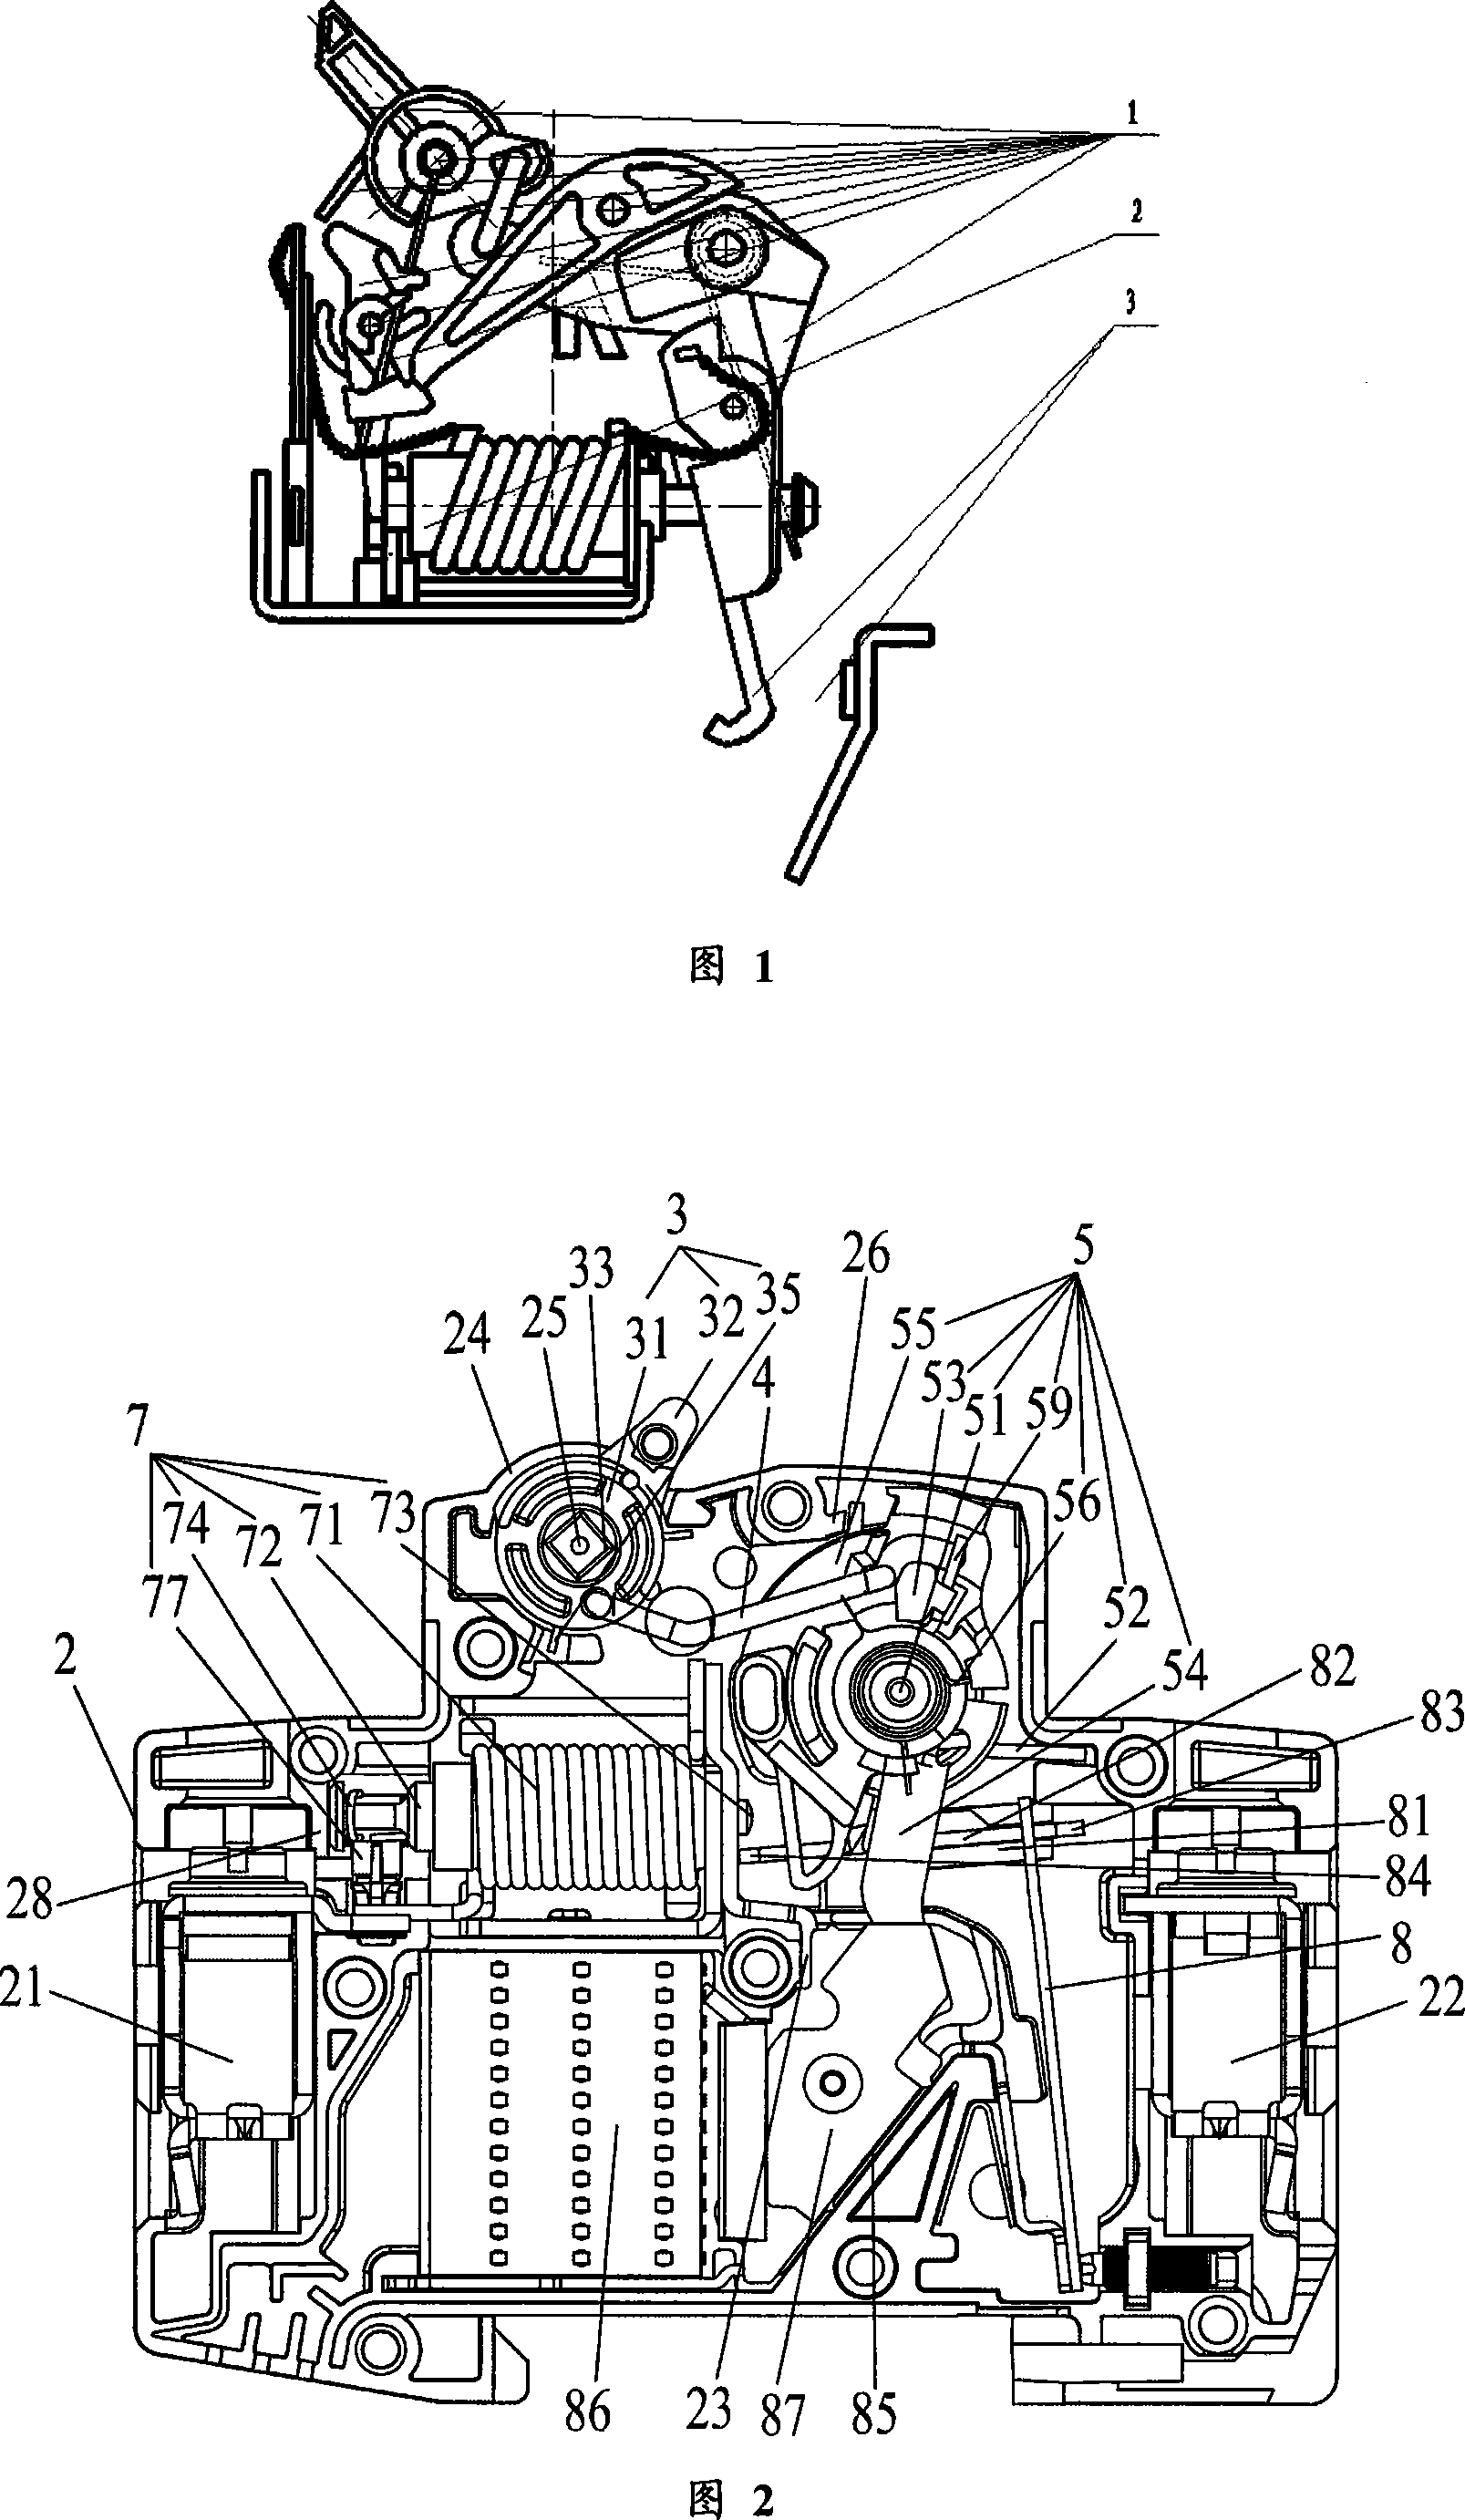 Actuating mechanism of small size circuit breaker